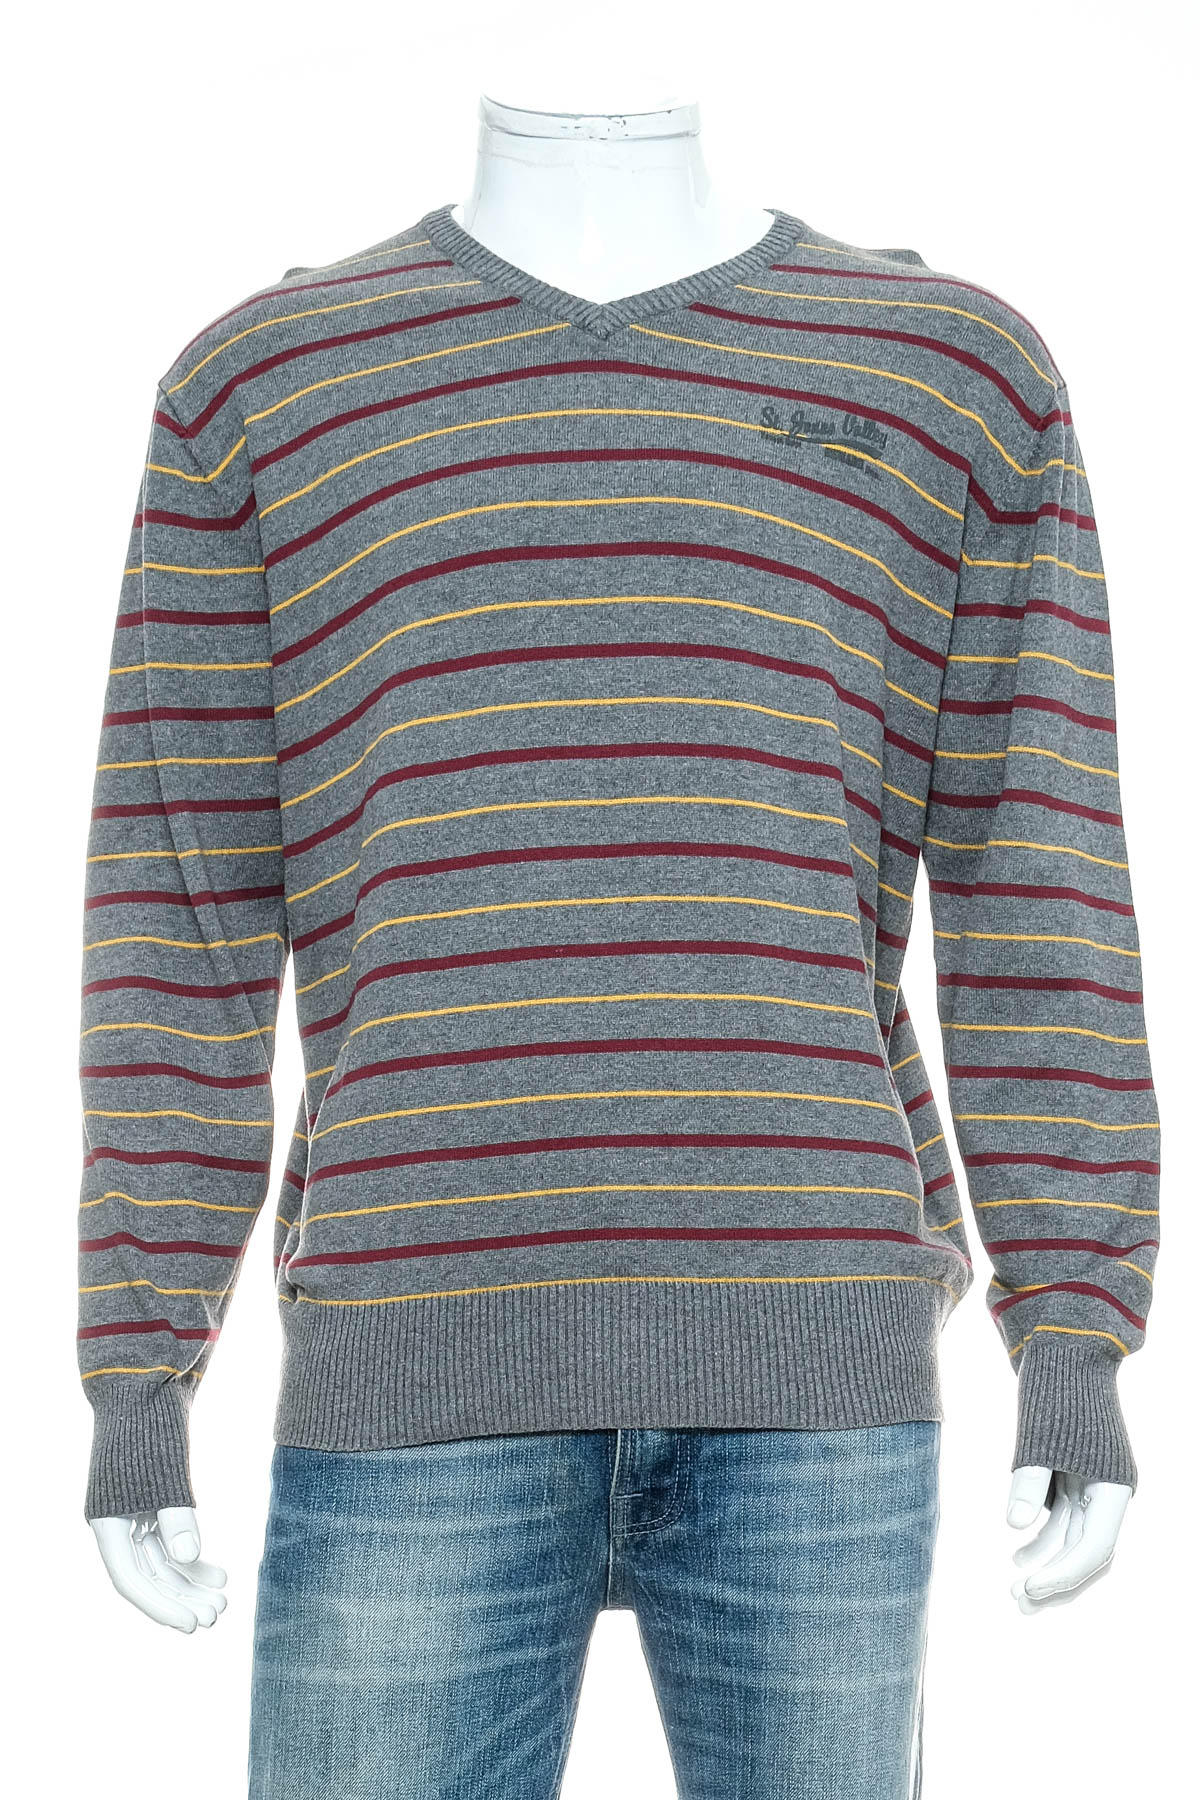 Men's sweater - REWARD FASHION - 0